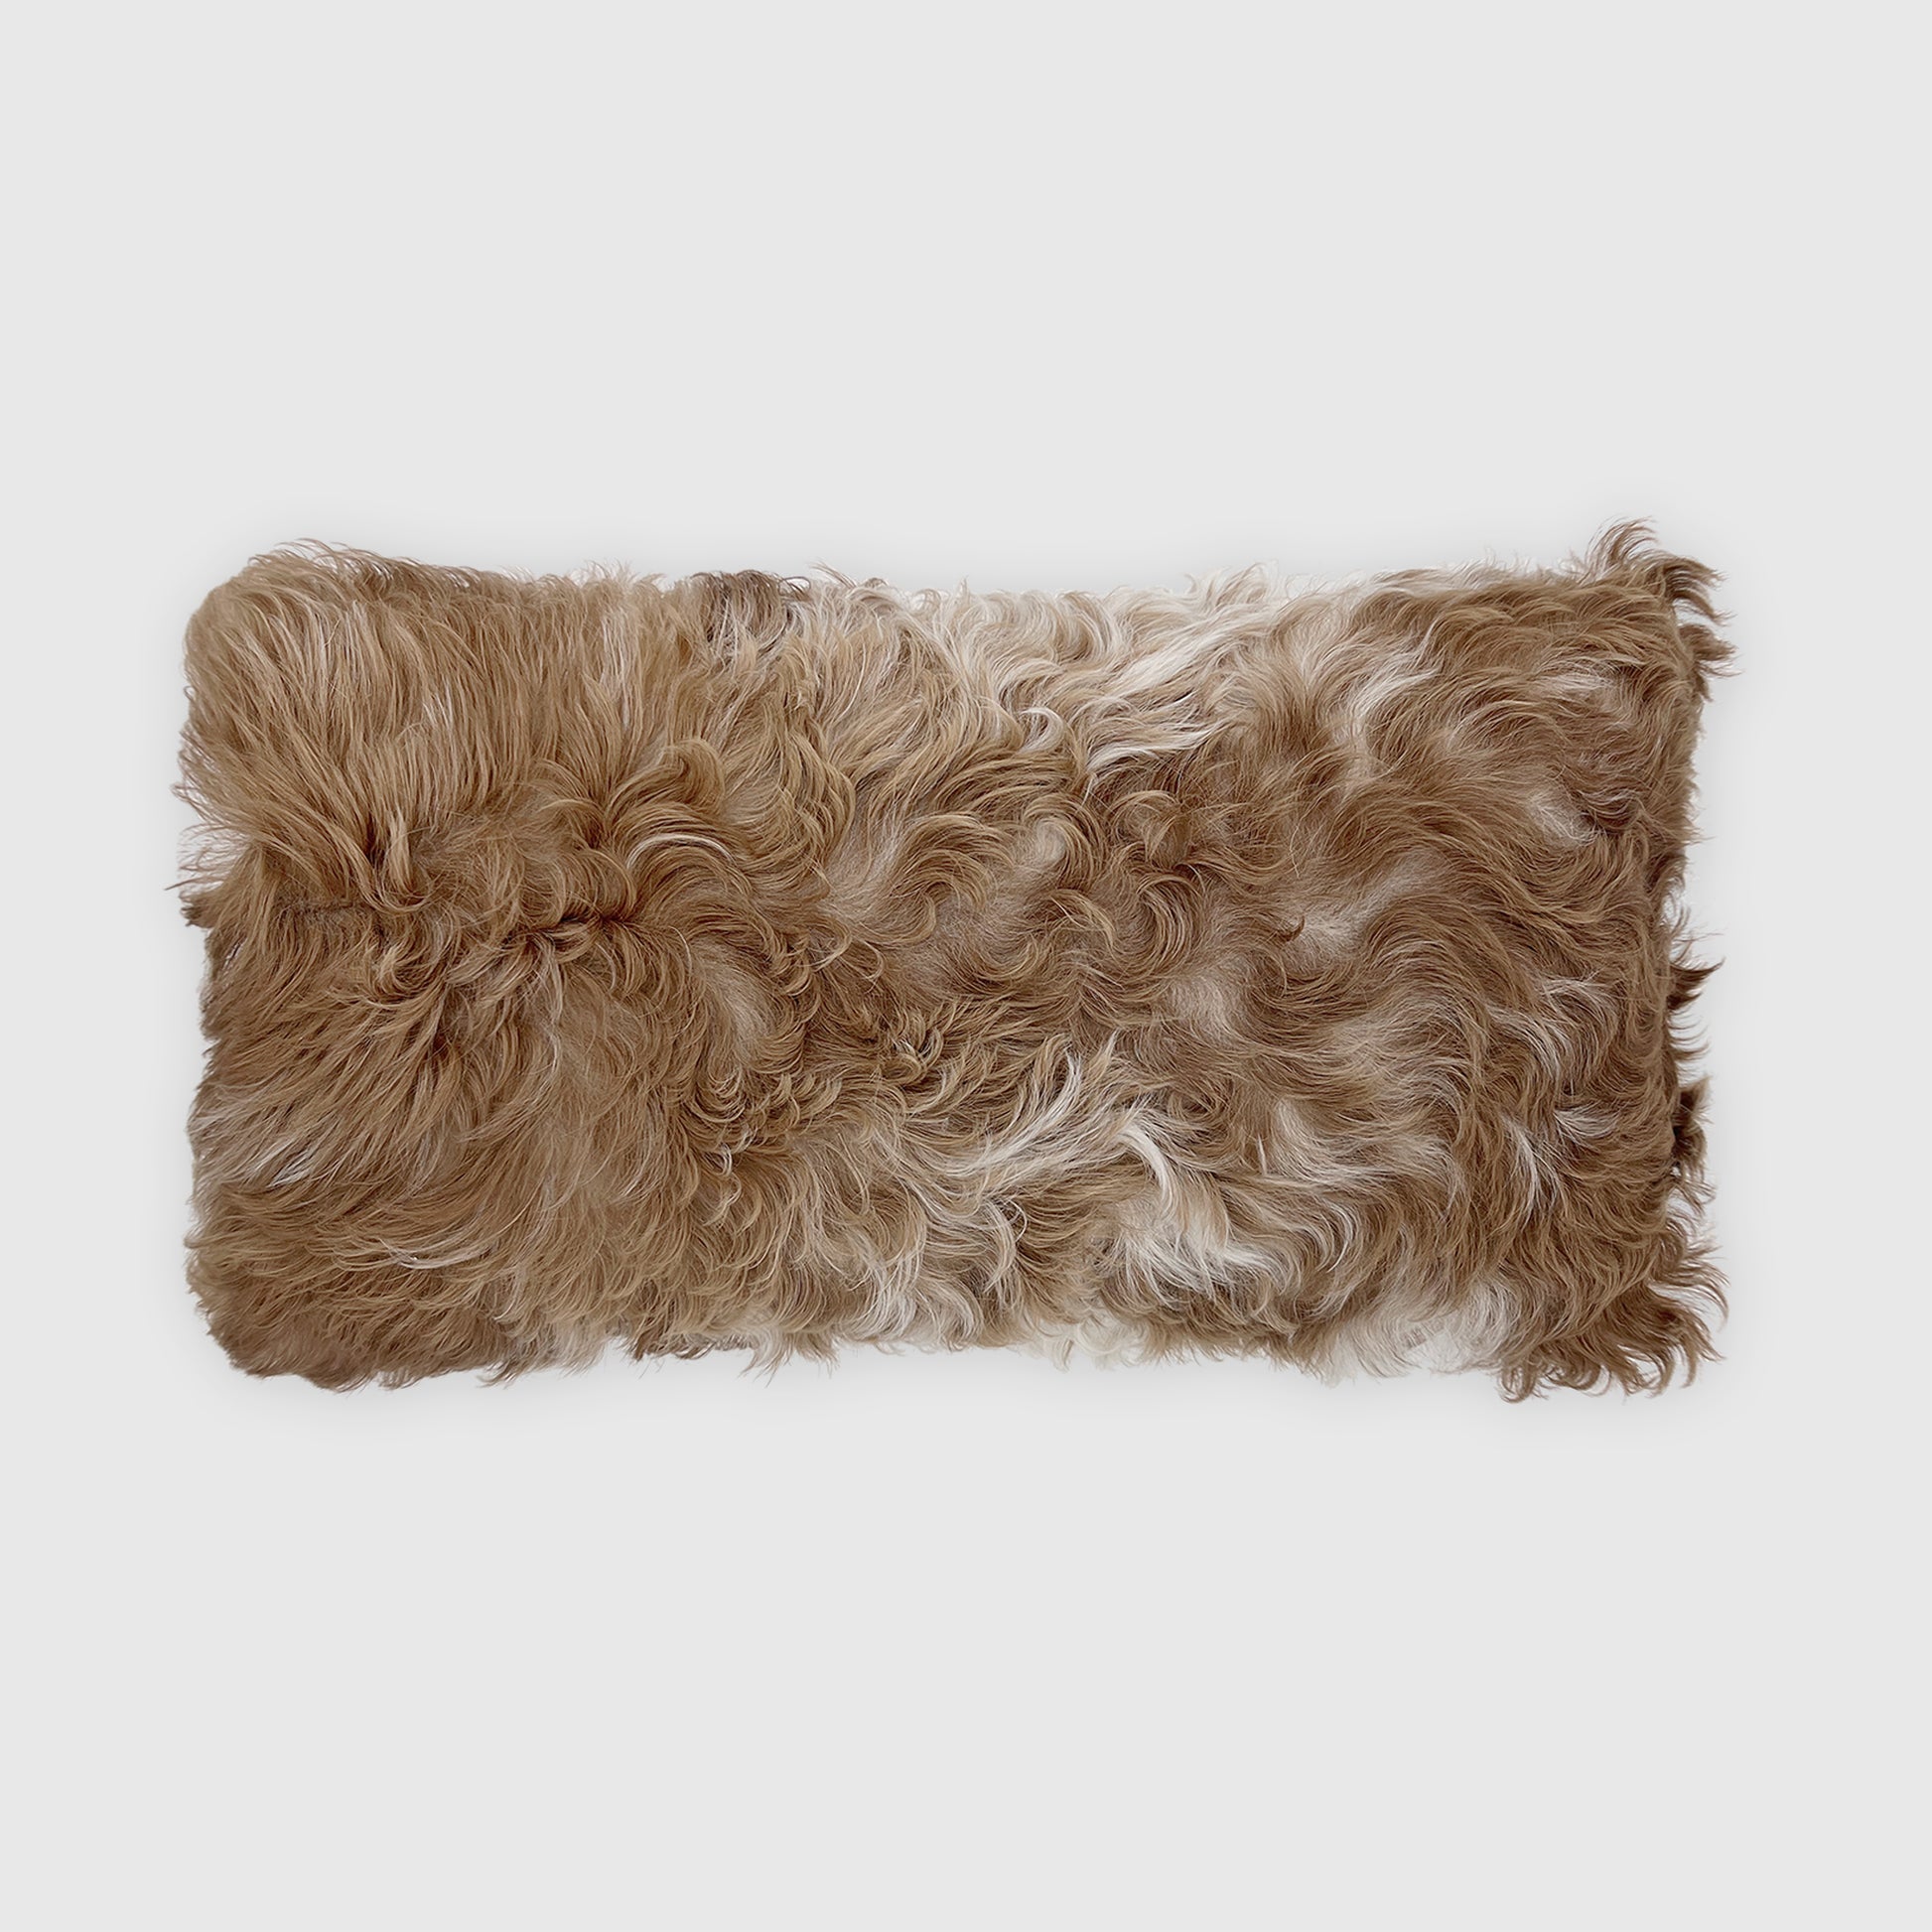 The Mood Tigrado Spanish Lambskin Lumbar Pillow, 12x22 in., Camel